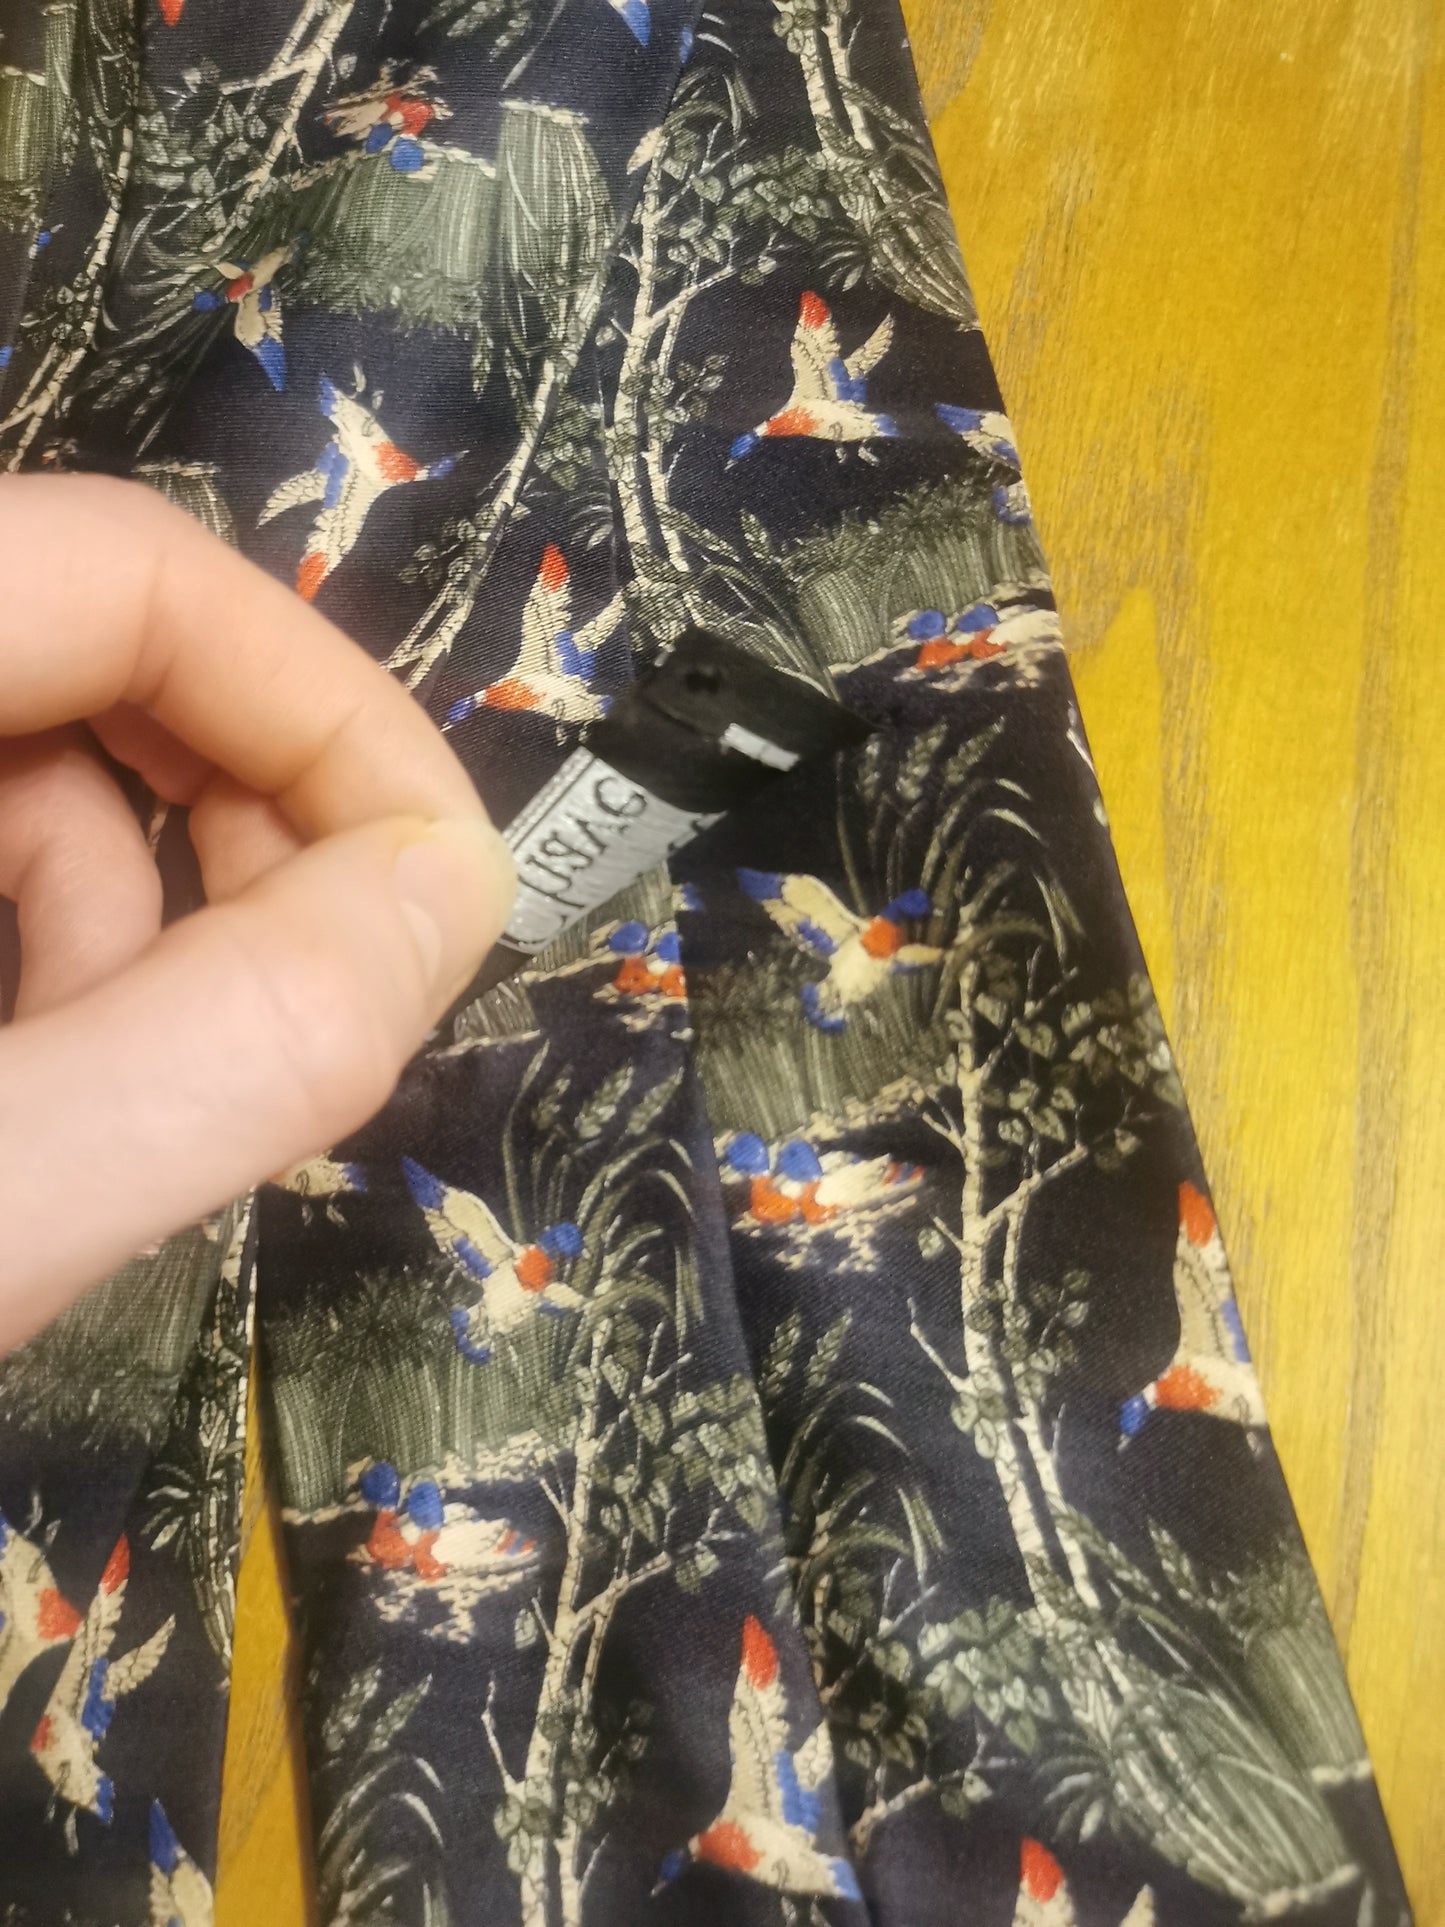 100% silk vintage Fox & Chave Italian duck tie